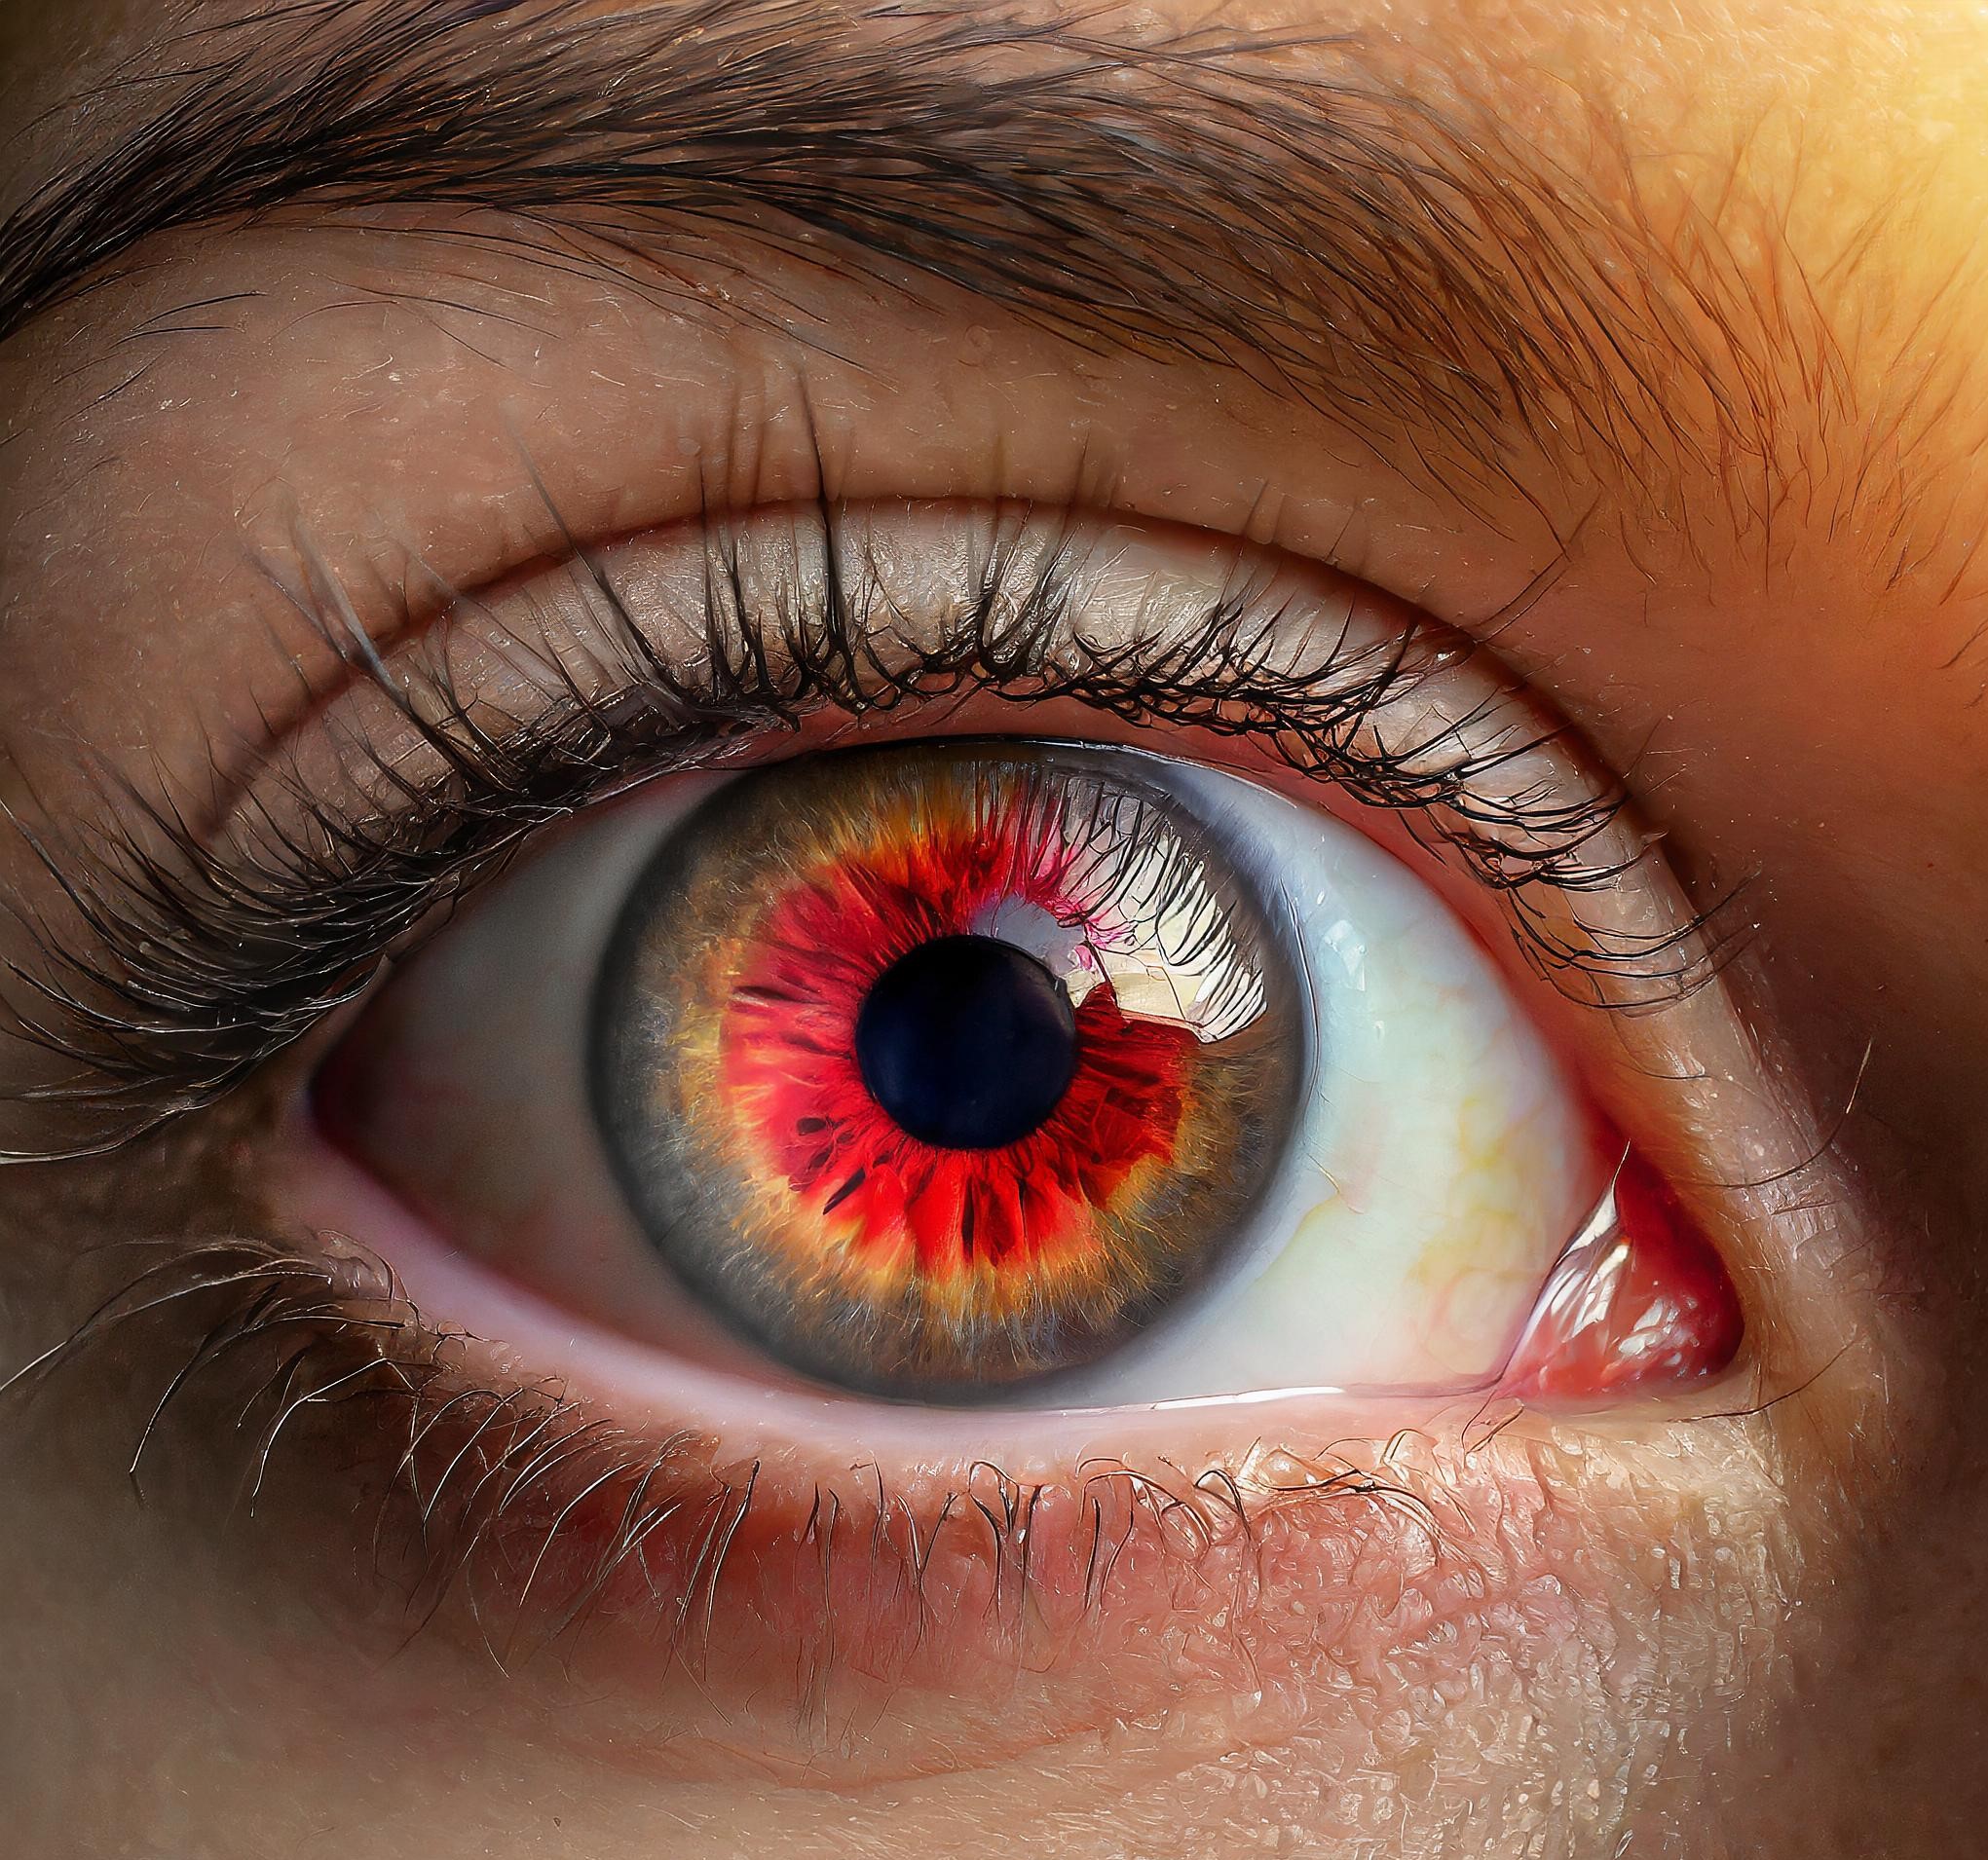 Conjuctivitis eye image